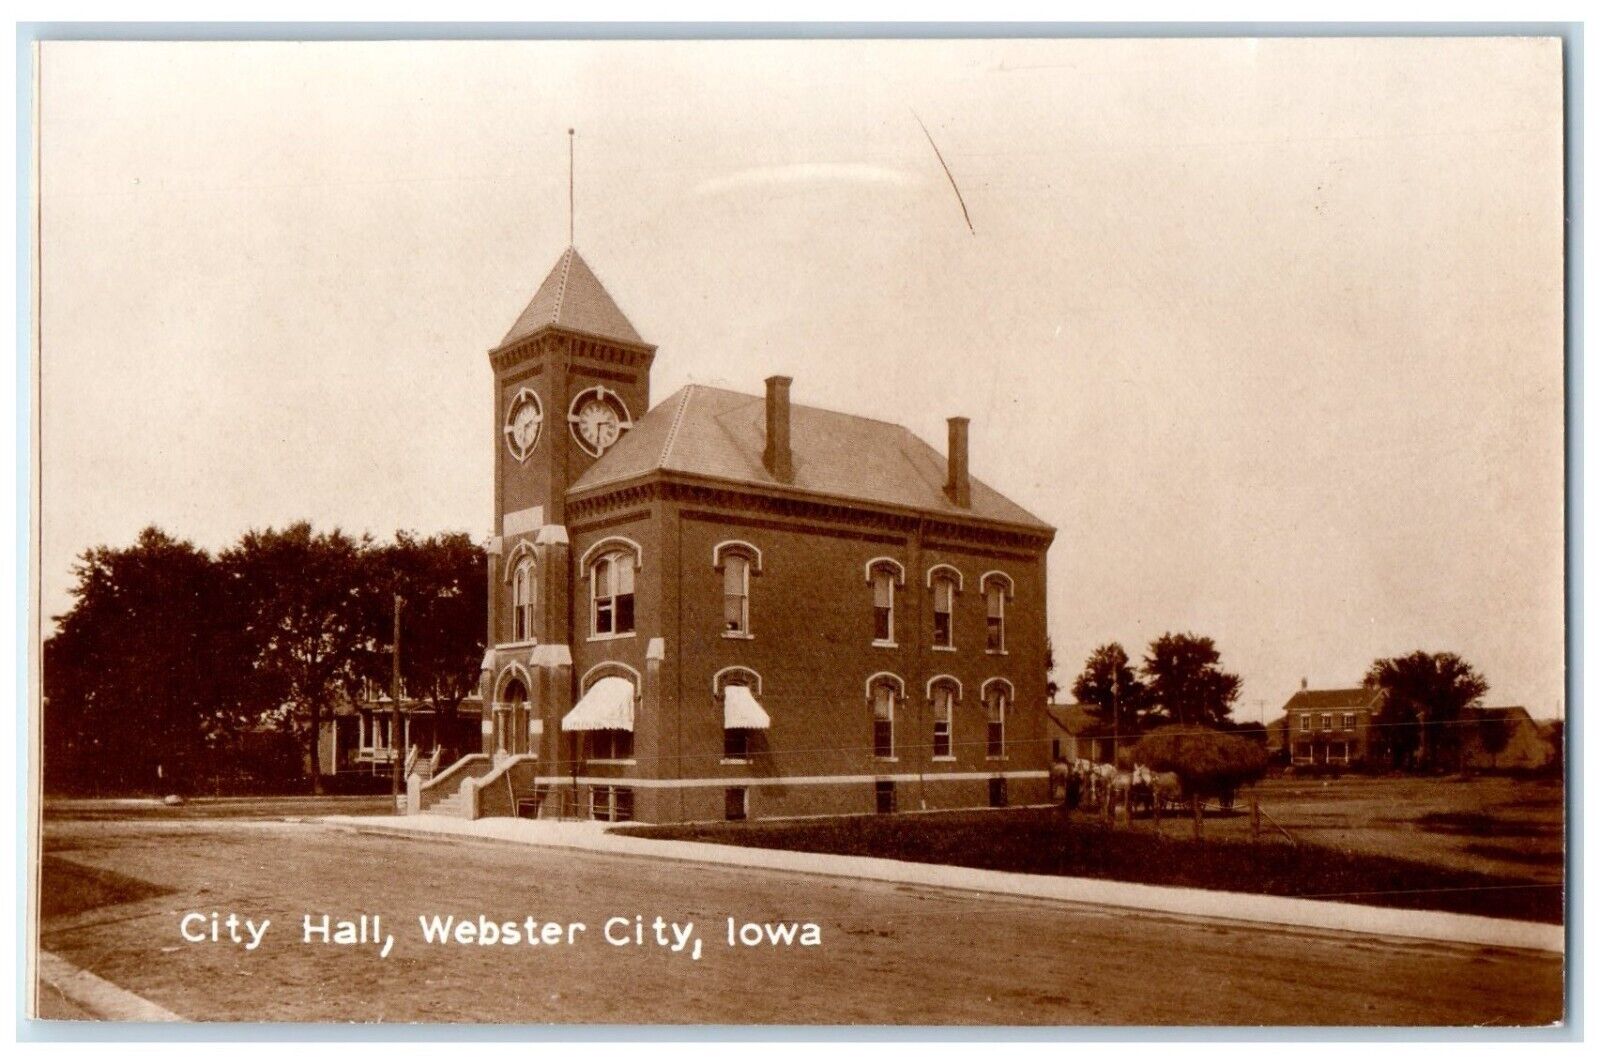 c1950 City Hall Exterior Building Webster City Iowa IA Vintage Antique Postcard